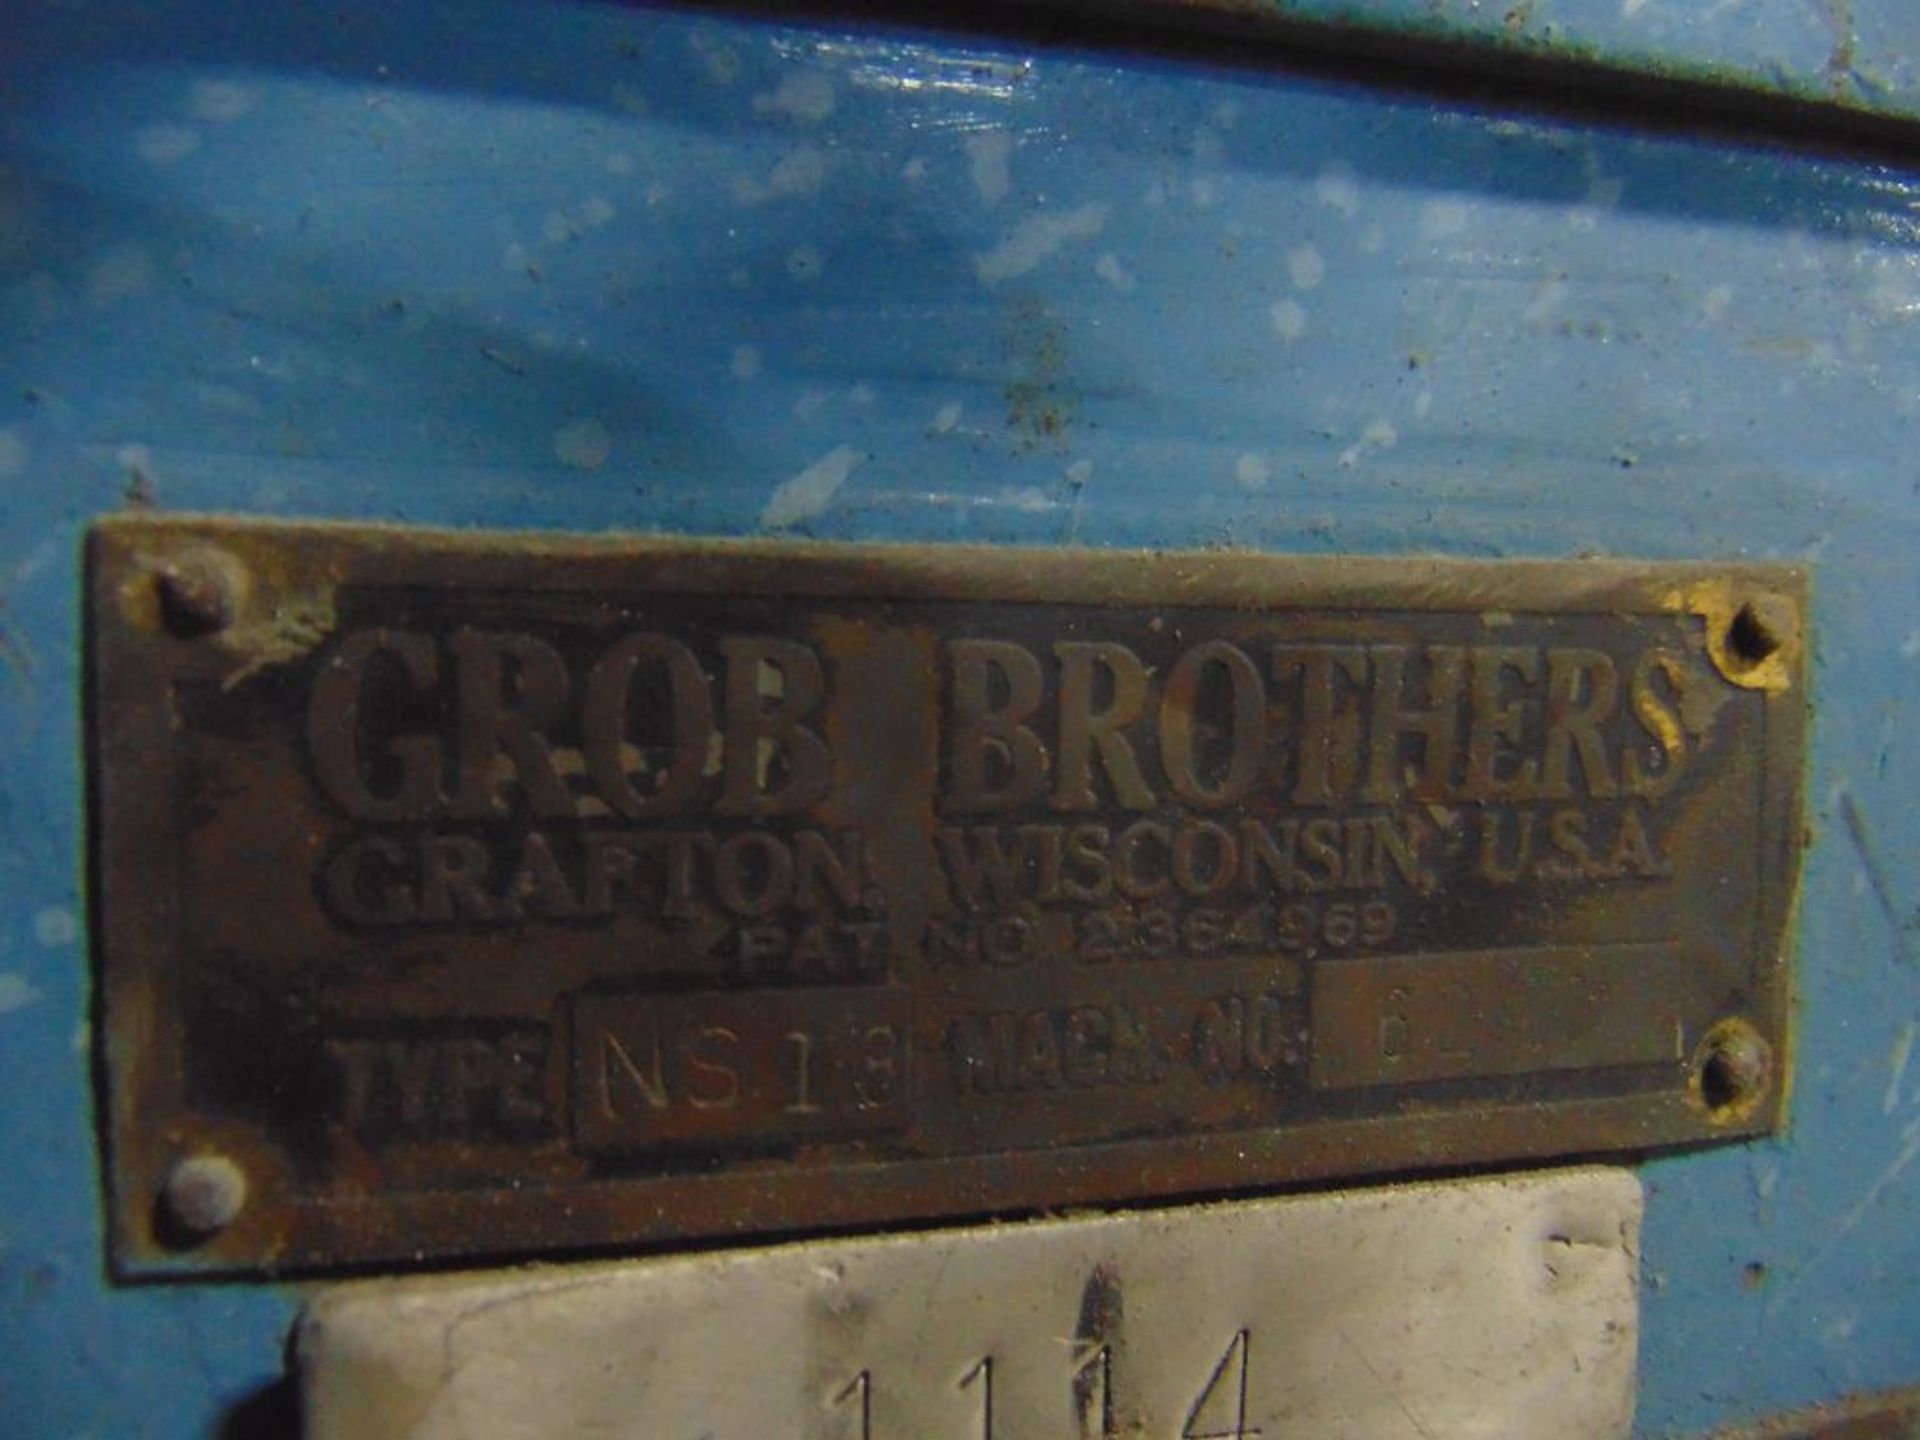 Grob Brothers 18" Band Saw - Image 5 of 6